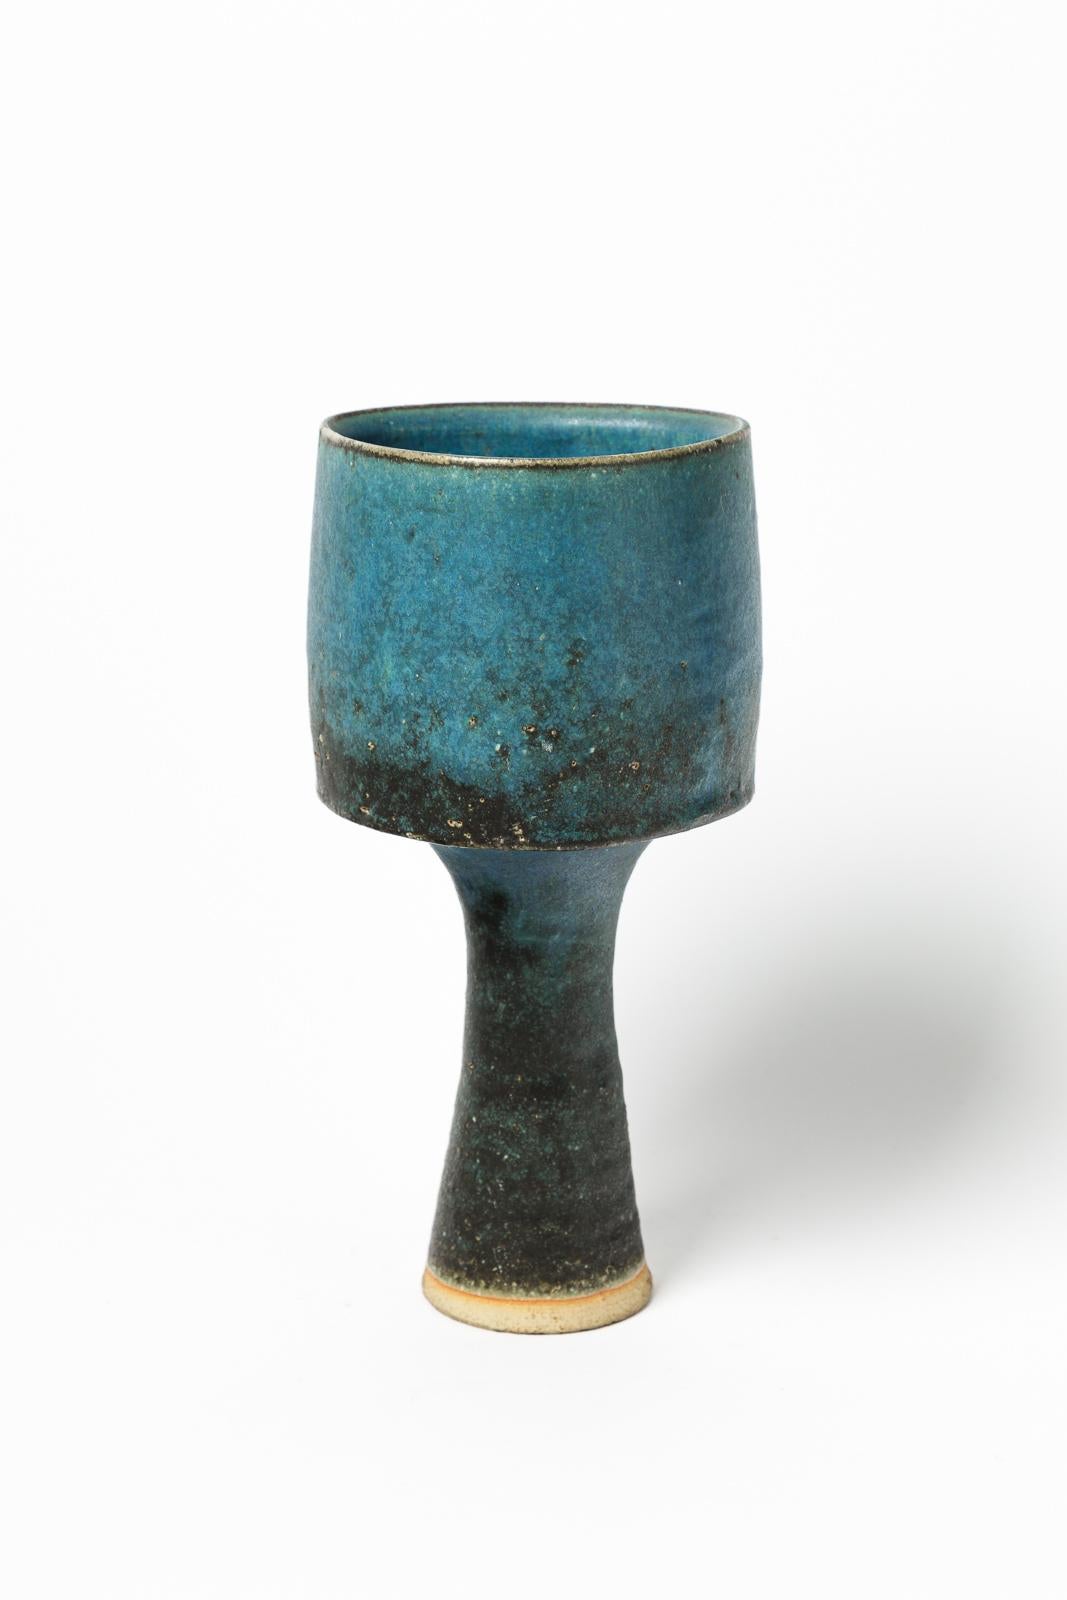 Danish or English 20th century ceramic

Signed under the base

Blue ceramic glaze color

Original perfect condition

height 26 cm
Large 15 cm